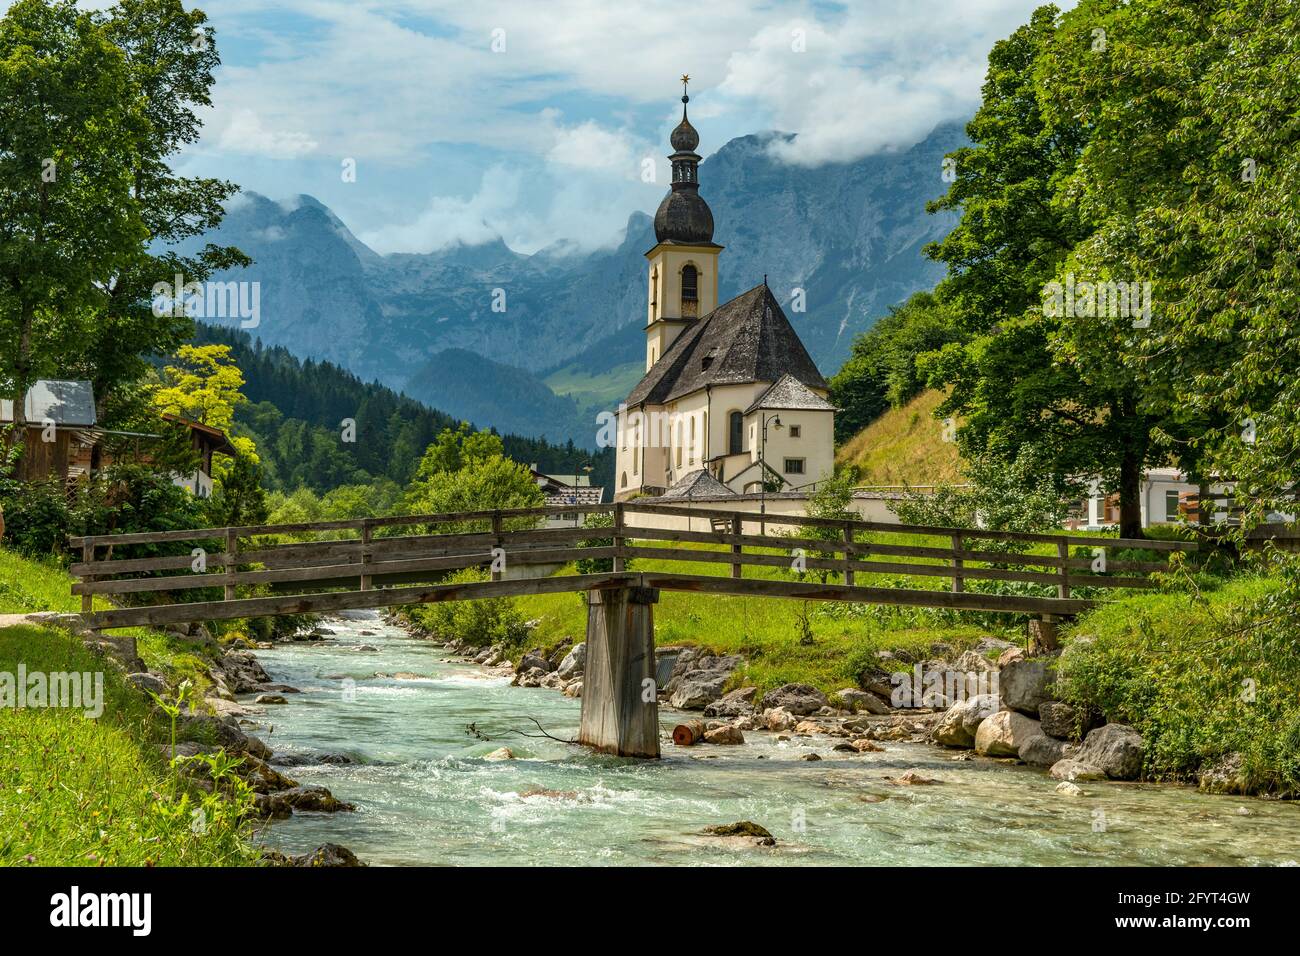 Sebastians St Kirche e fiume Tal, Ramsau, vicino a Berchtesgaden, Germania Foto Stock